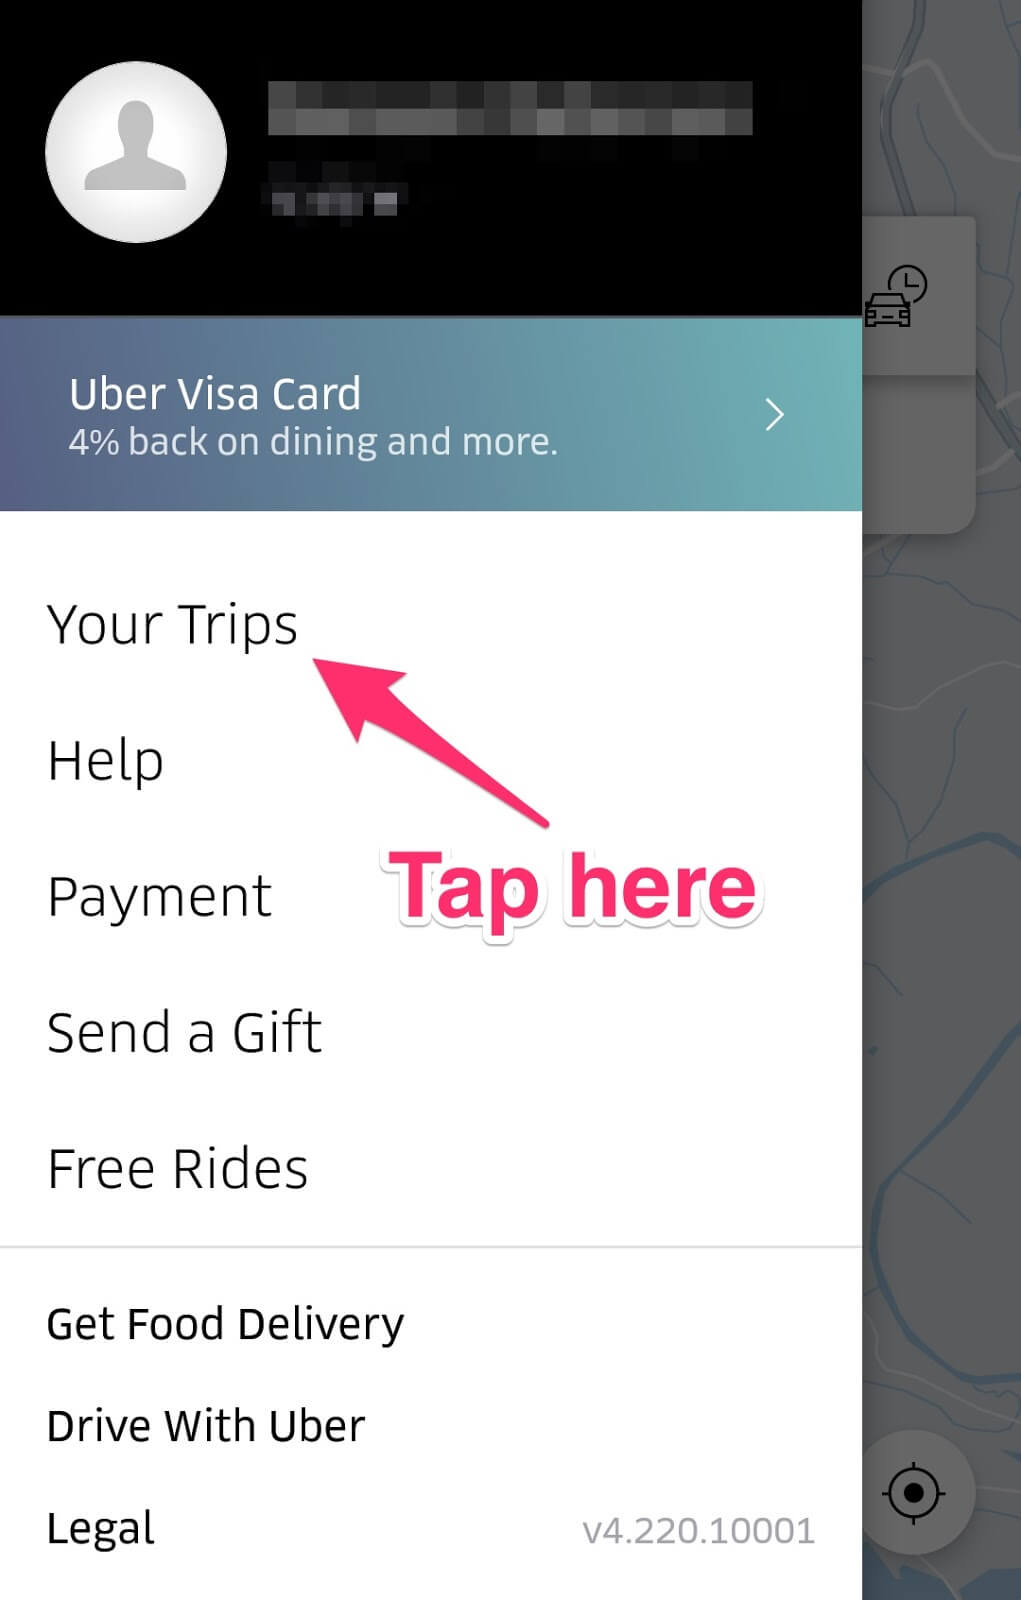 Recibo de Uber: Tus viajes